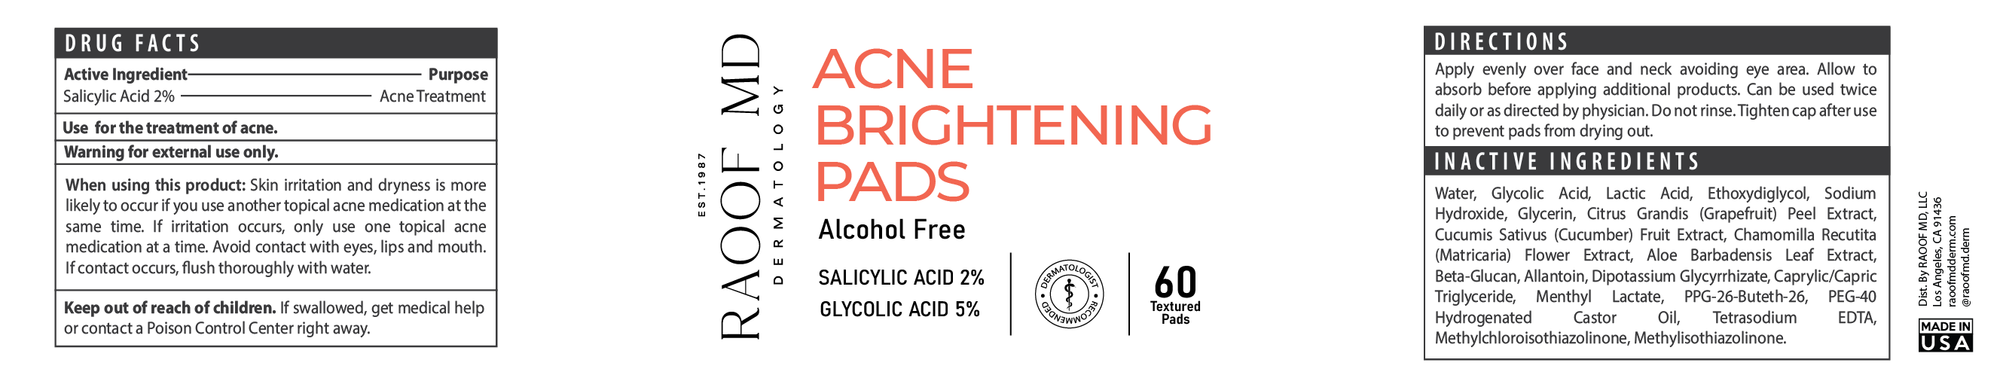 Acne Brightening Pads